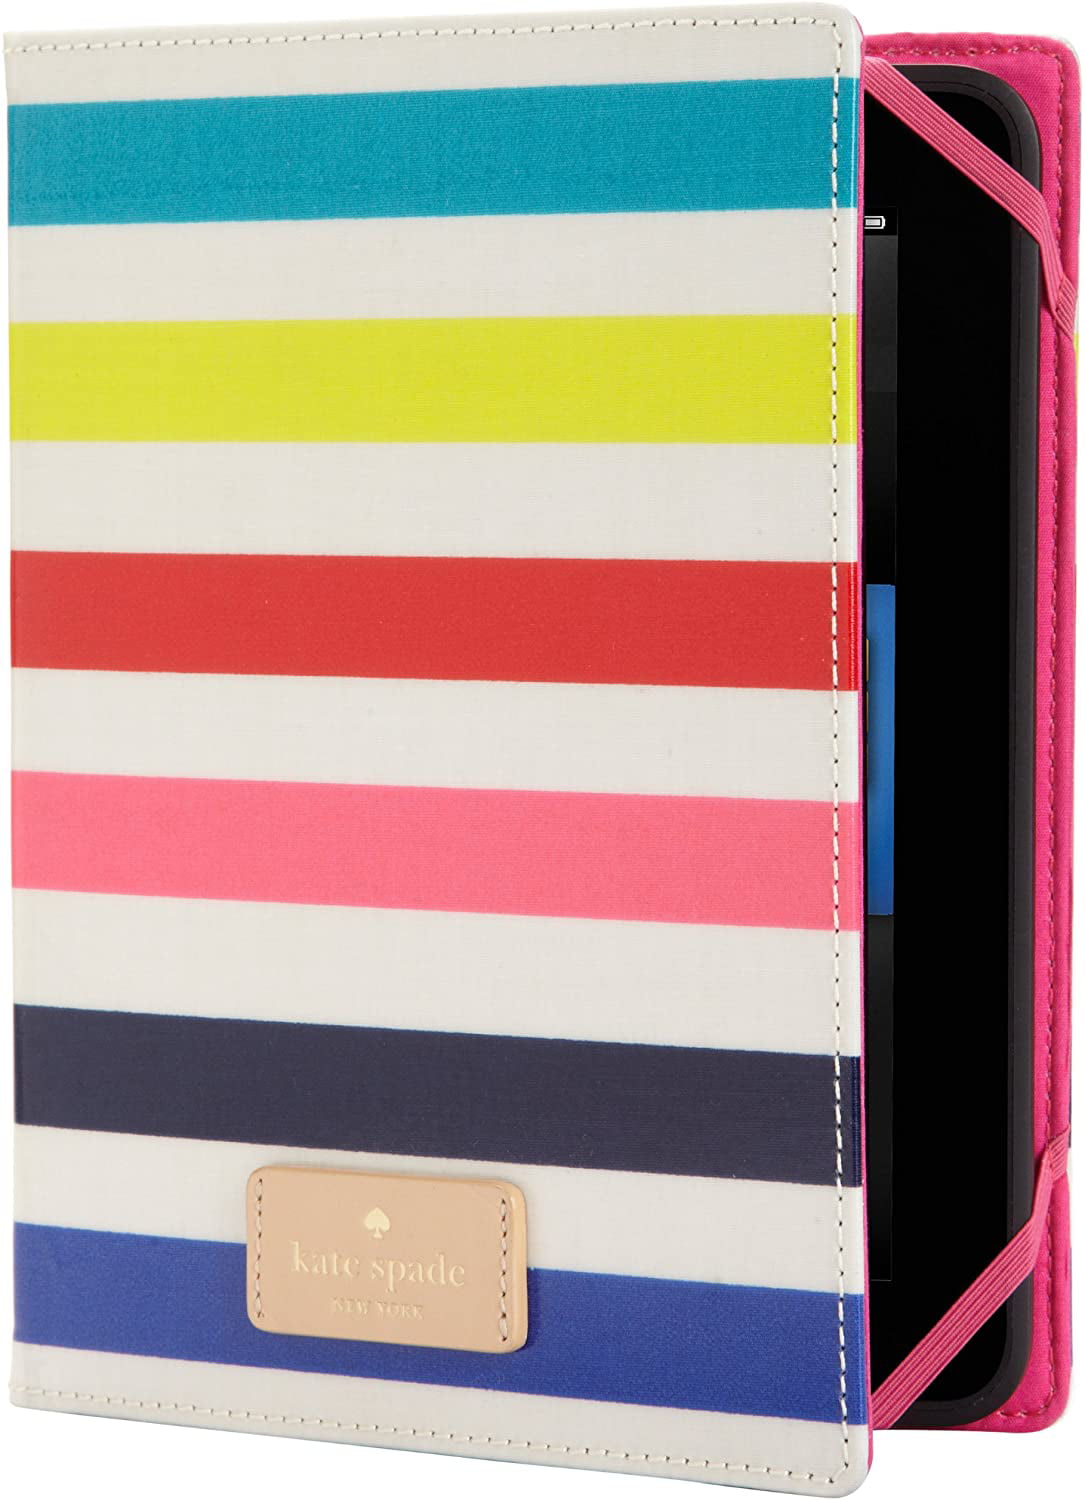 Kate Spade New York Soft Tablet Case iPad Purple | eBay